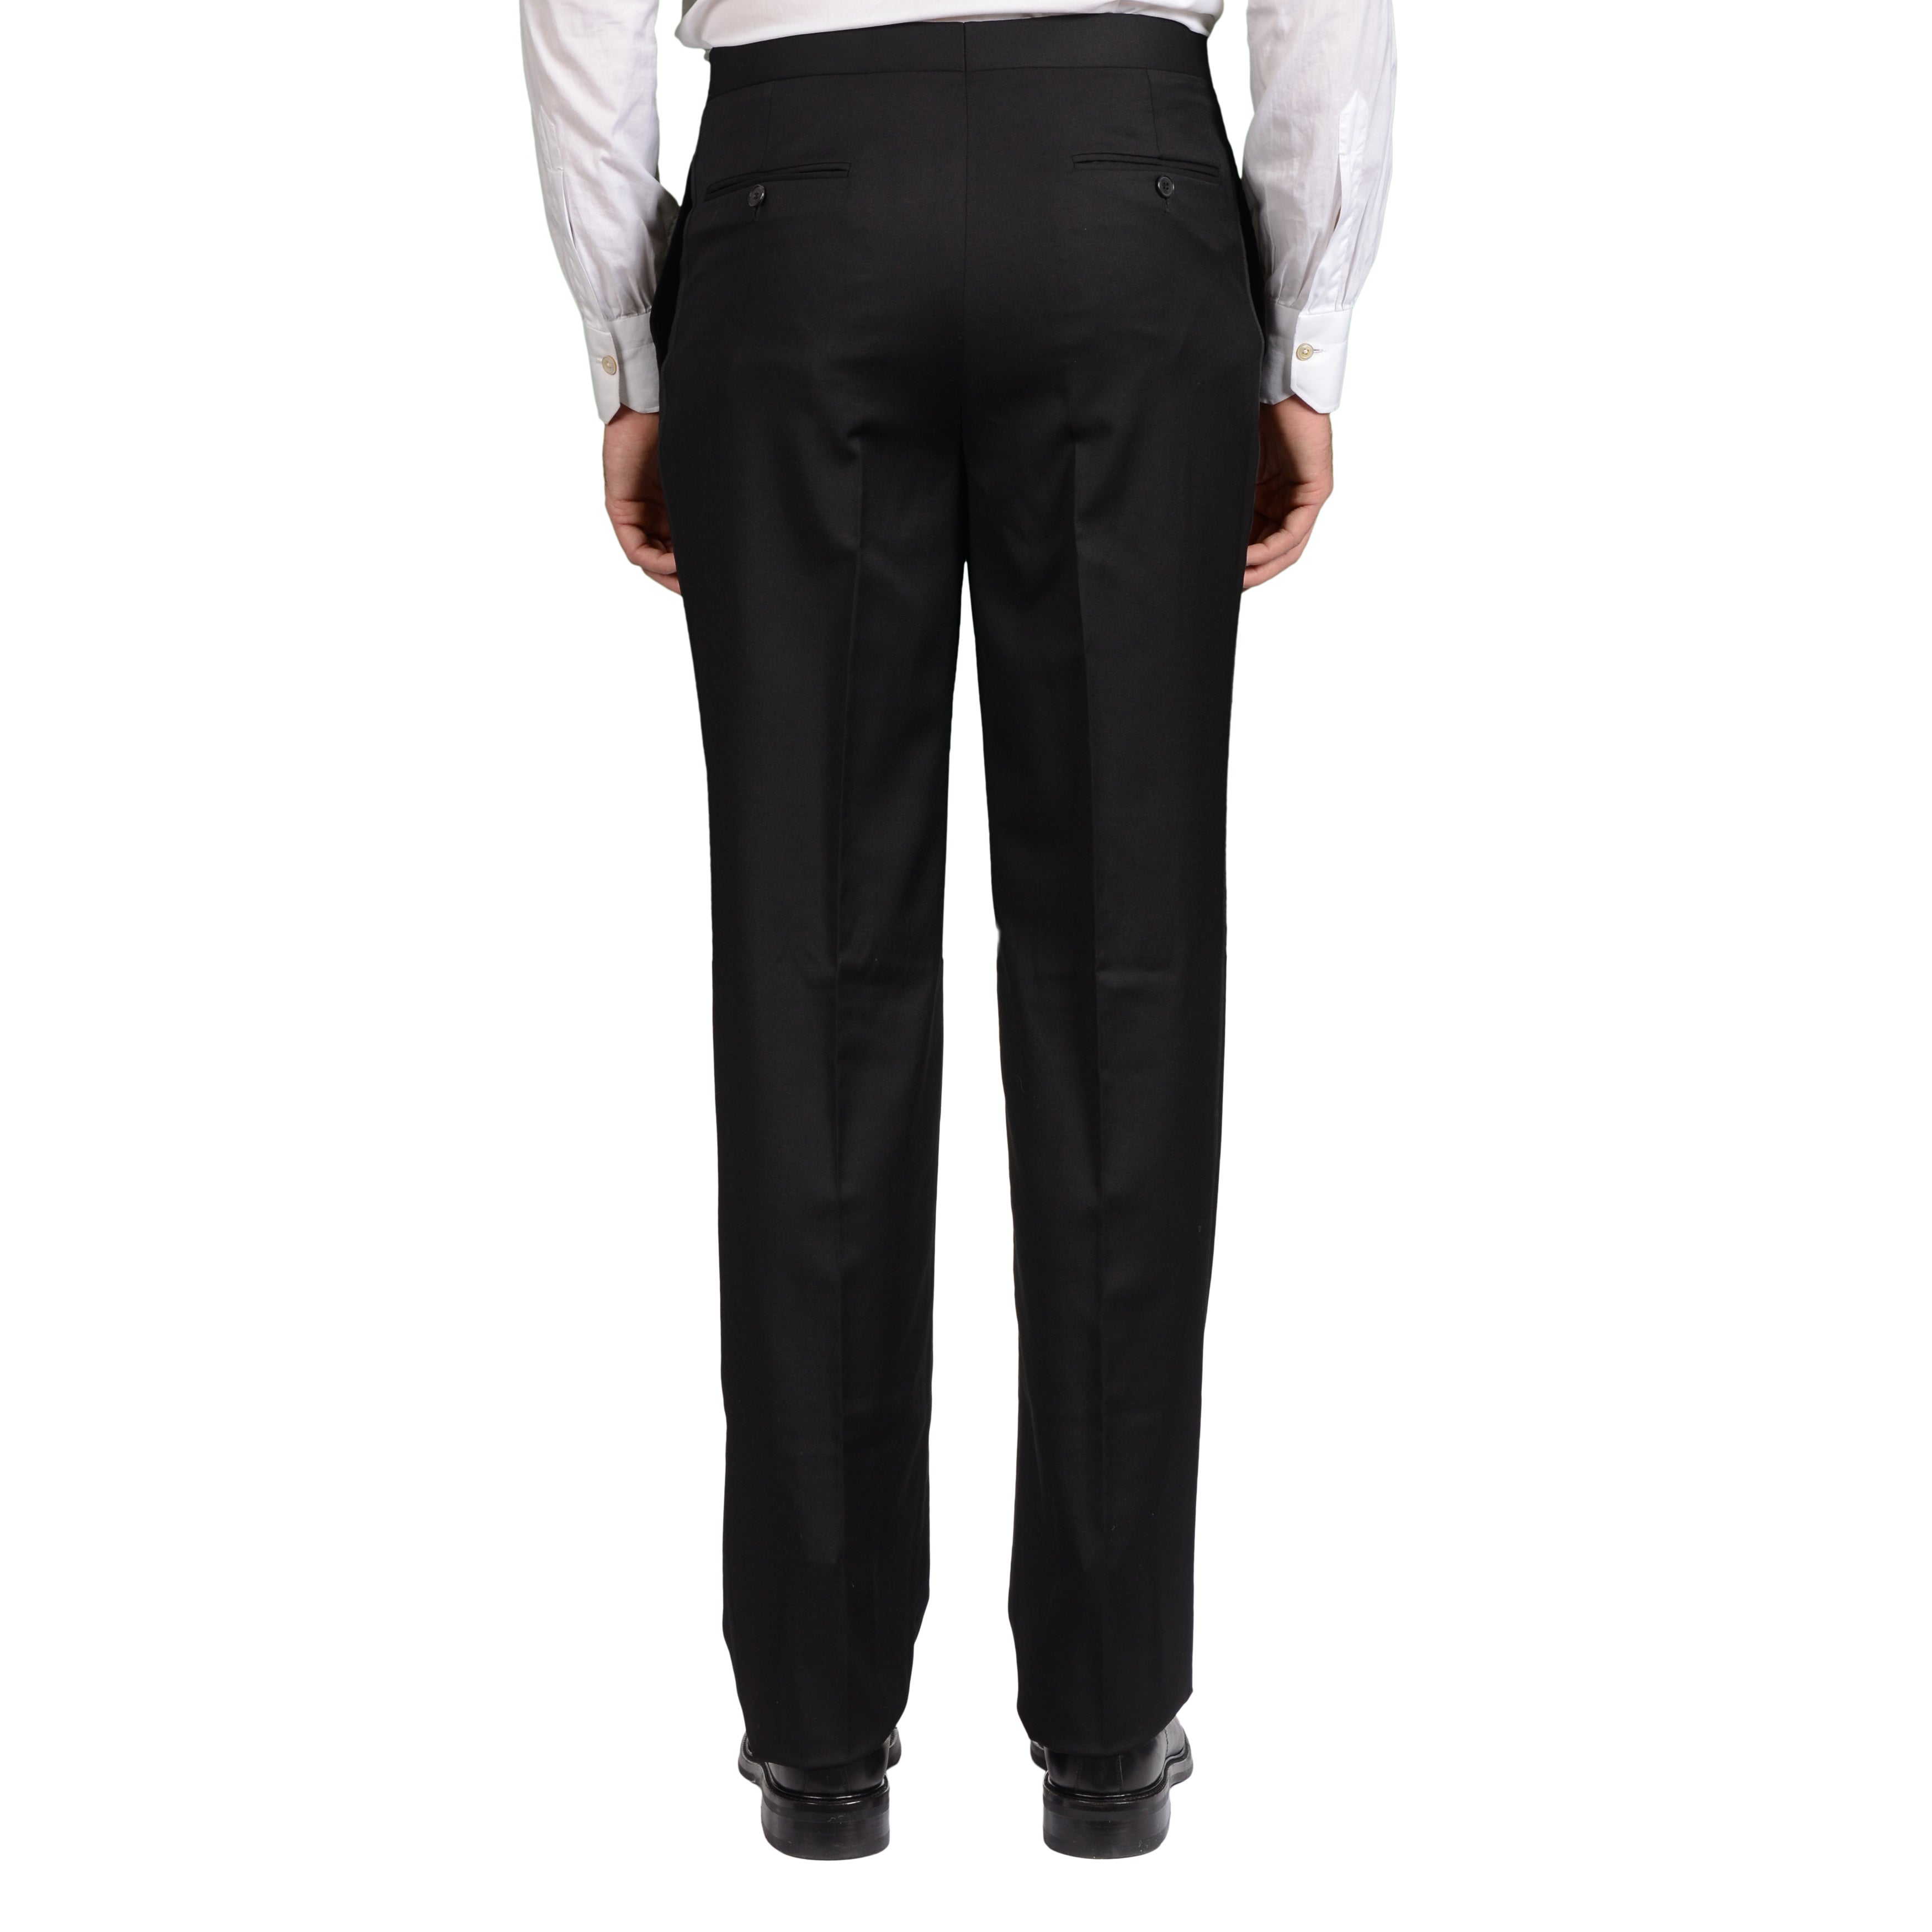 GARY ANDERSON Handmade Black Wool SP Tuxedo Dress Pants EU 50 NEW US 34 GARY ANDERSON